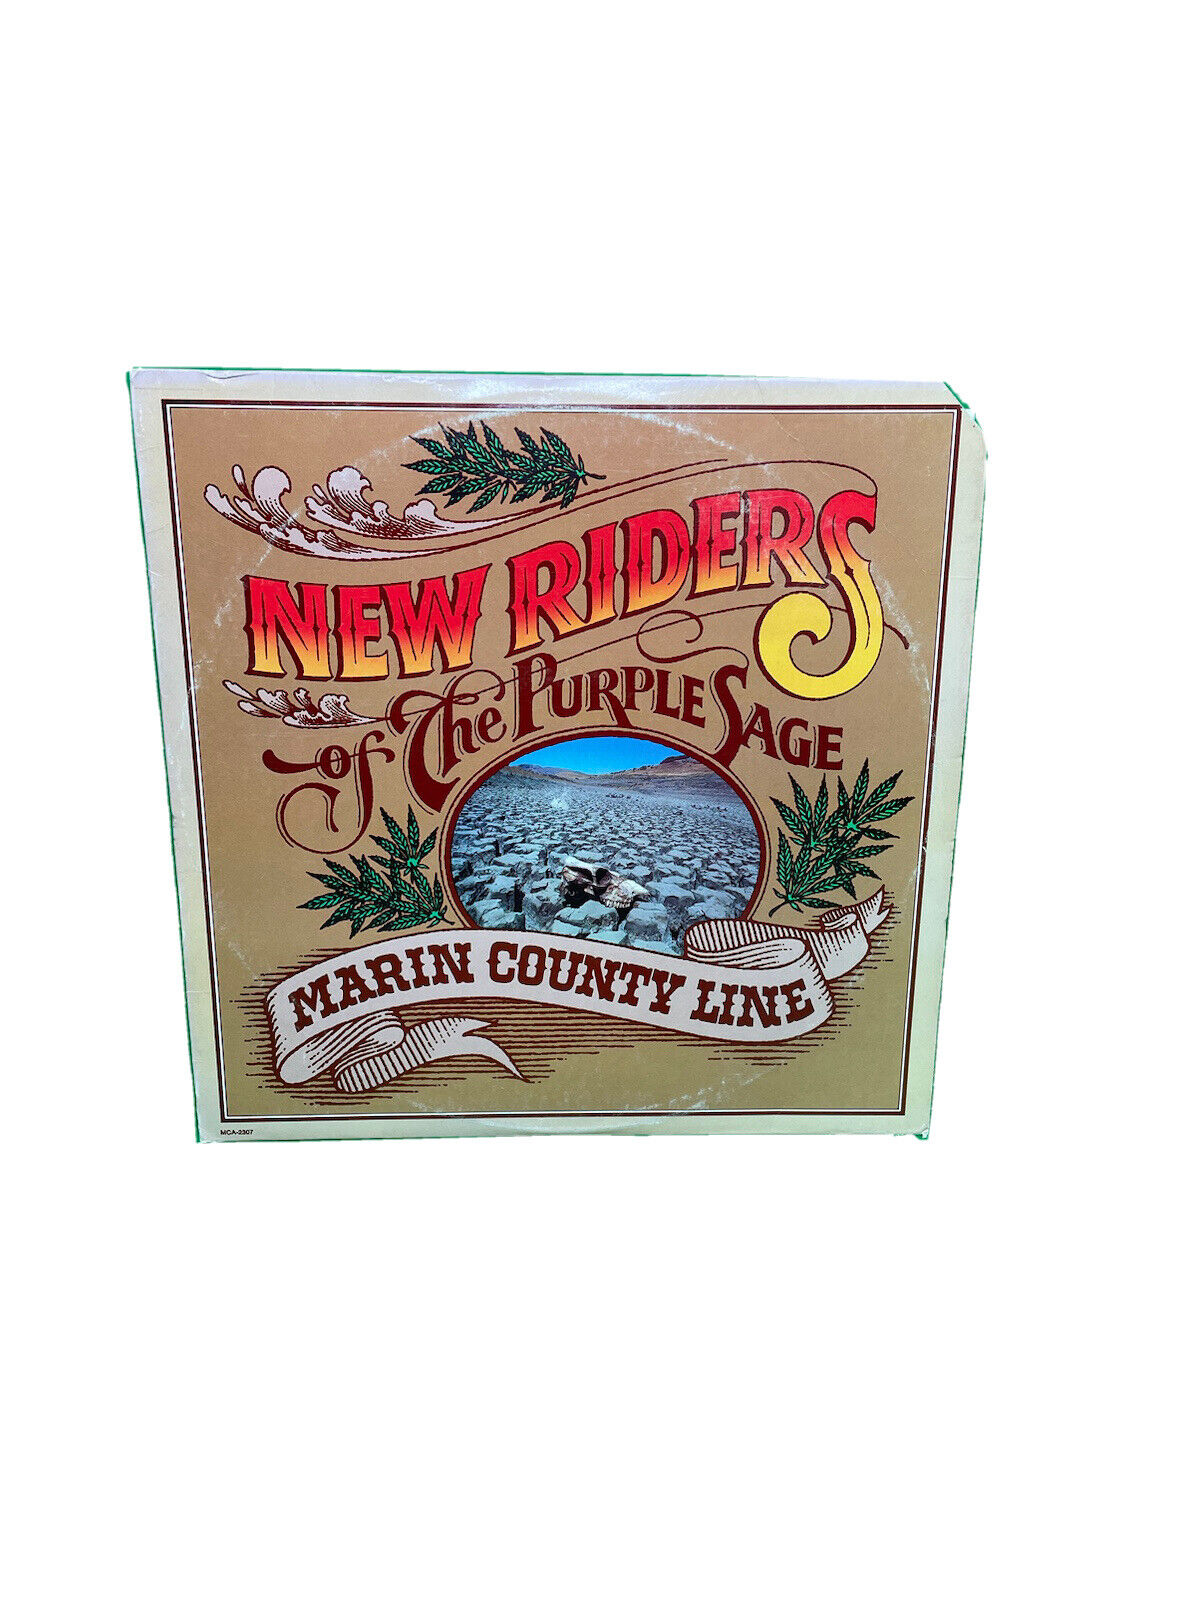 NEW RIDERS OF THE PURPLE SAGE MARIN COUNTY LINE - MCA 1977 VINYL LP RECORD G+ G+